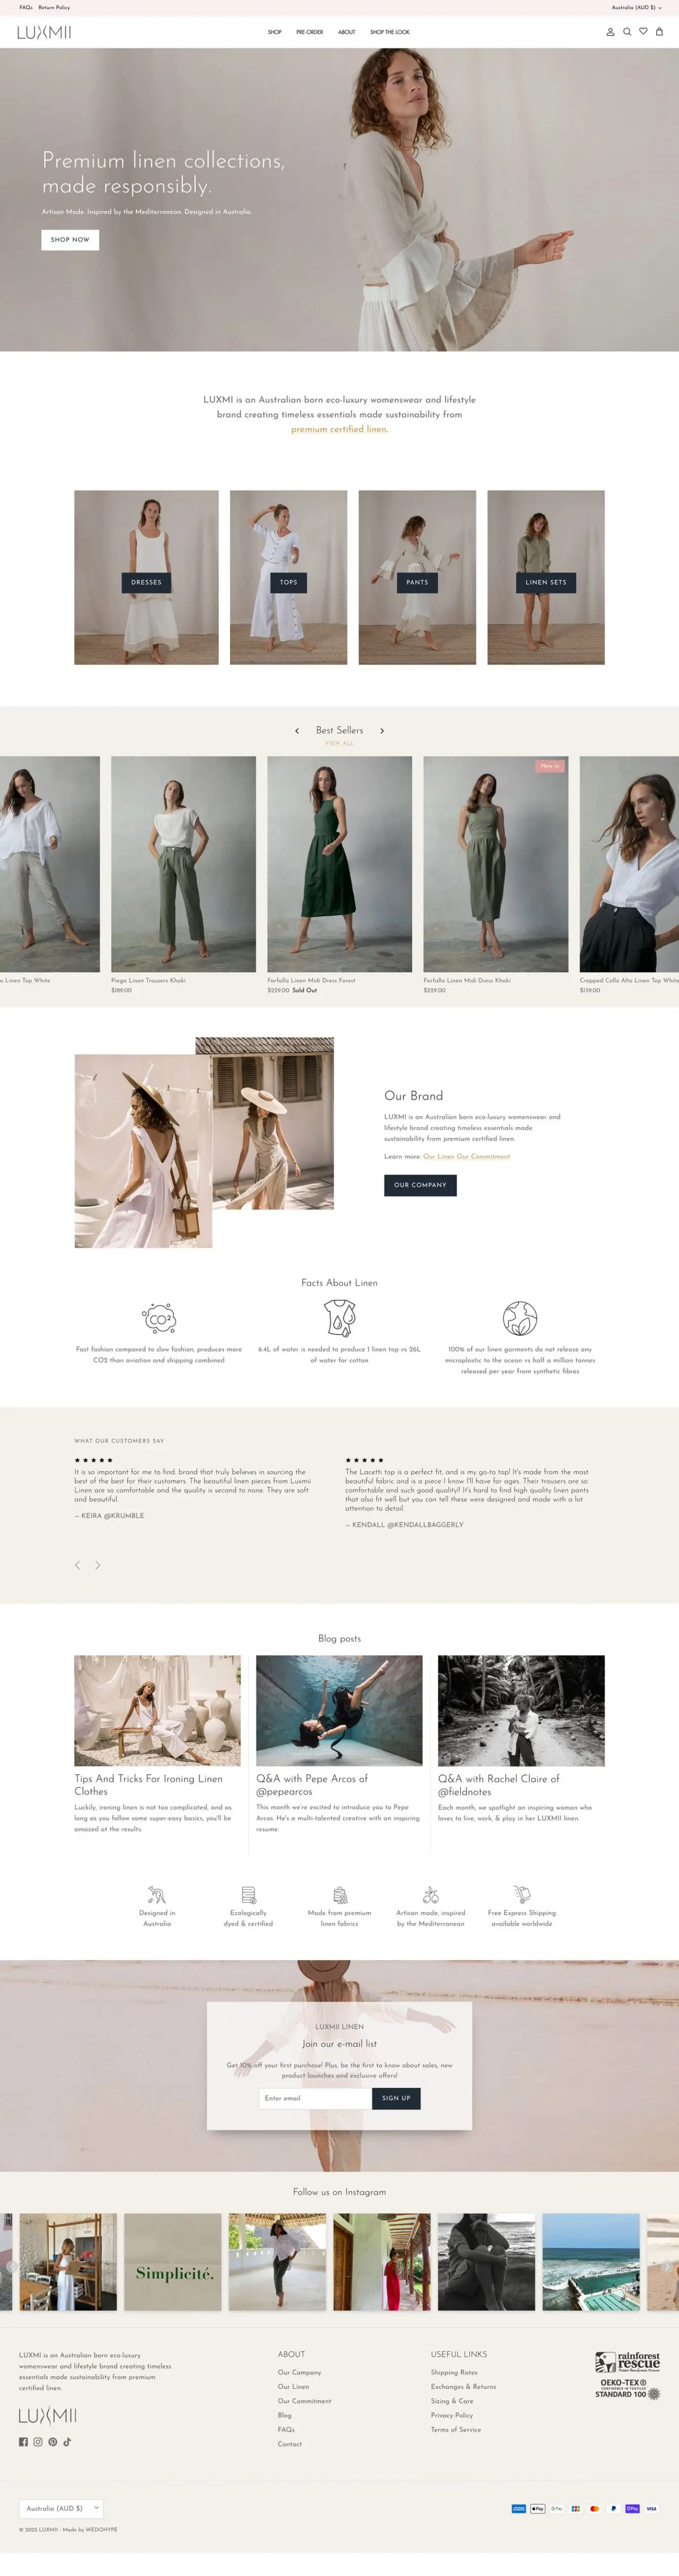 Luxmii-Homepage